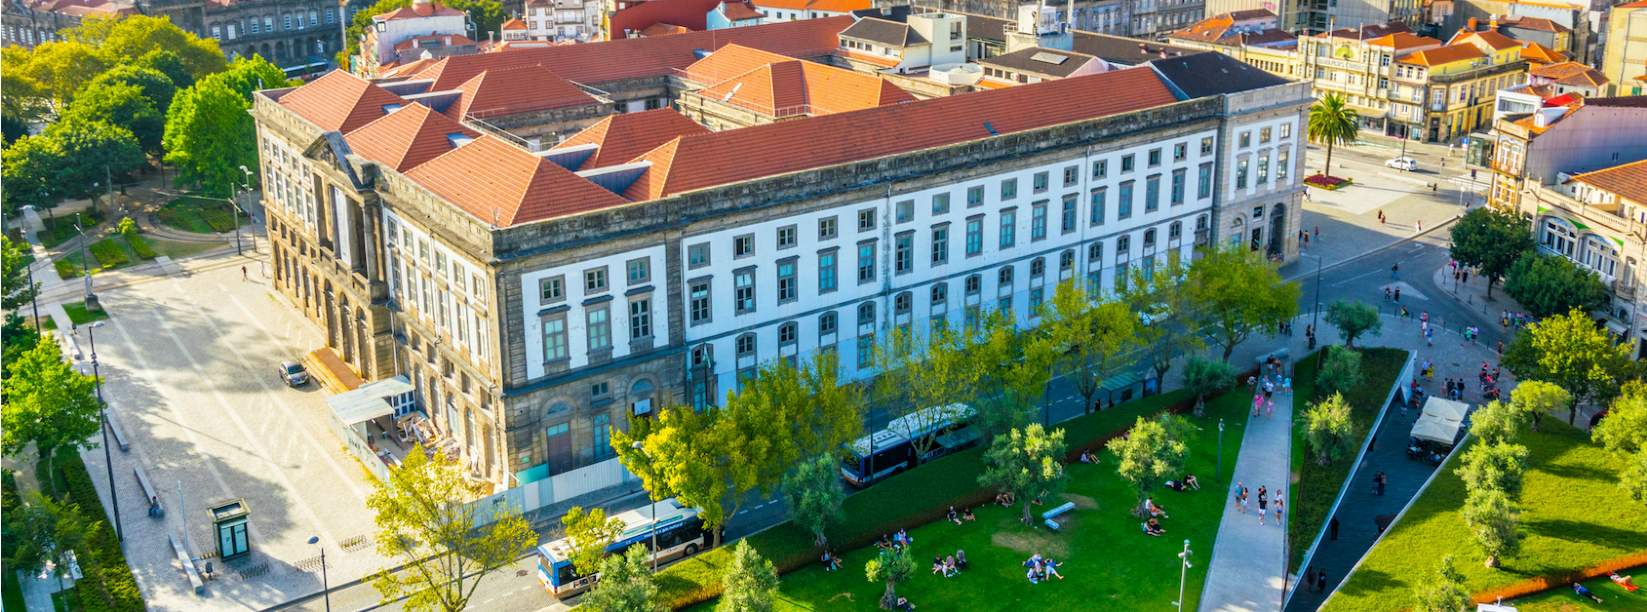 University of Porto, Portugal